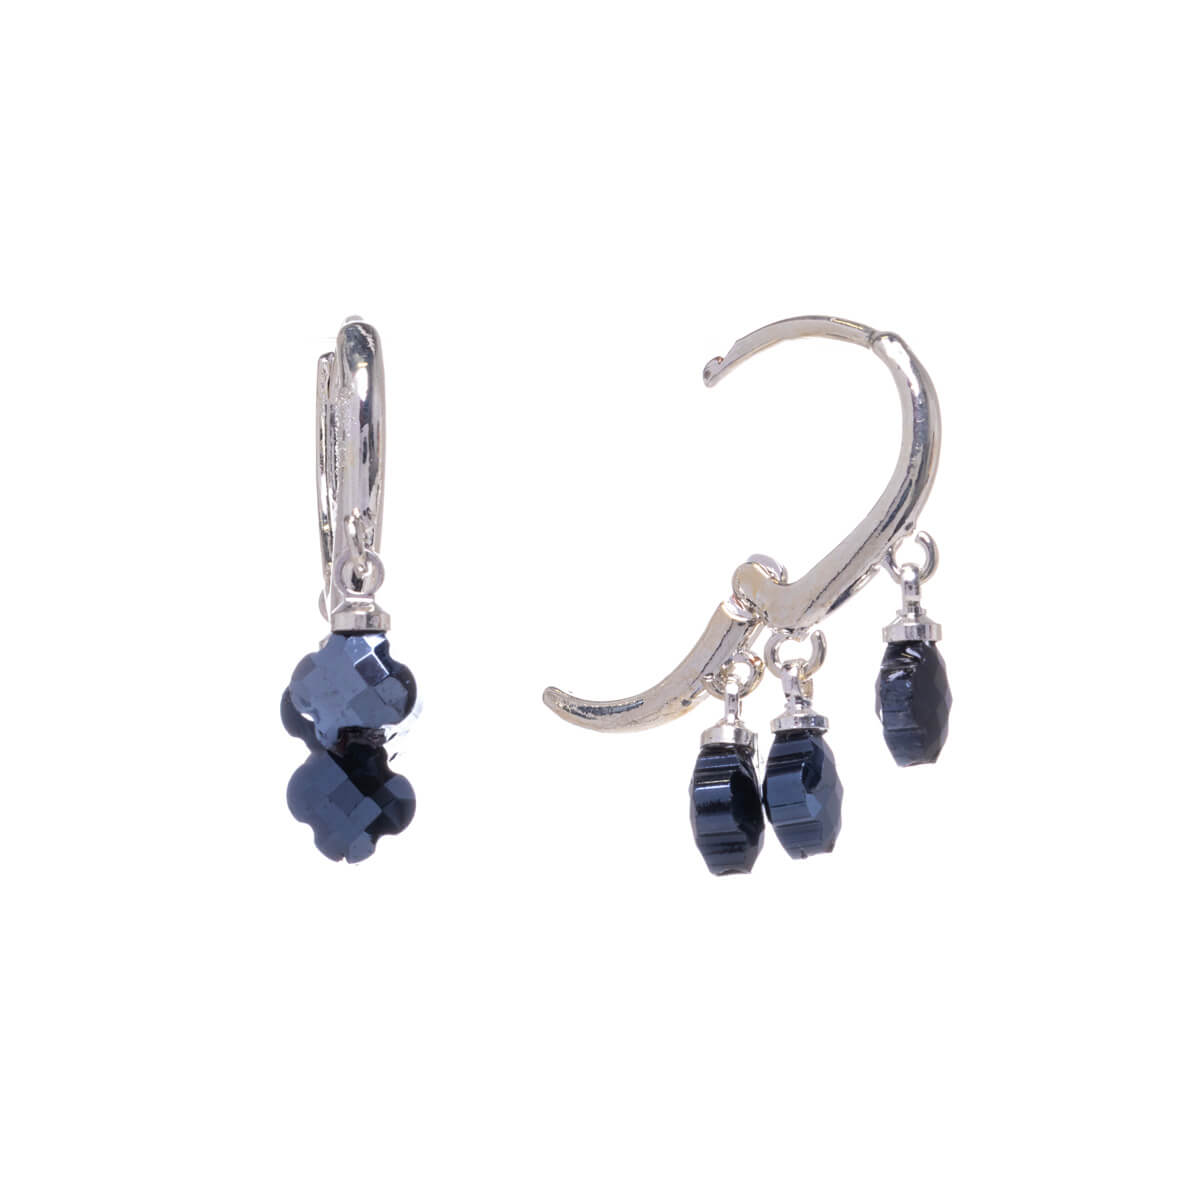 Silver earrings with glass bead pendants